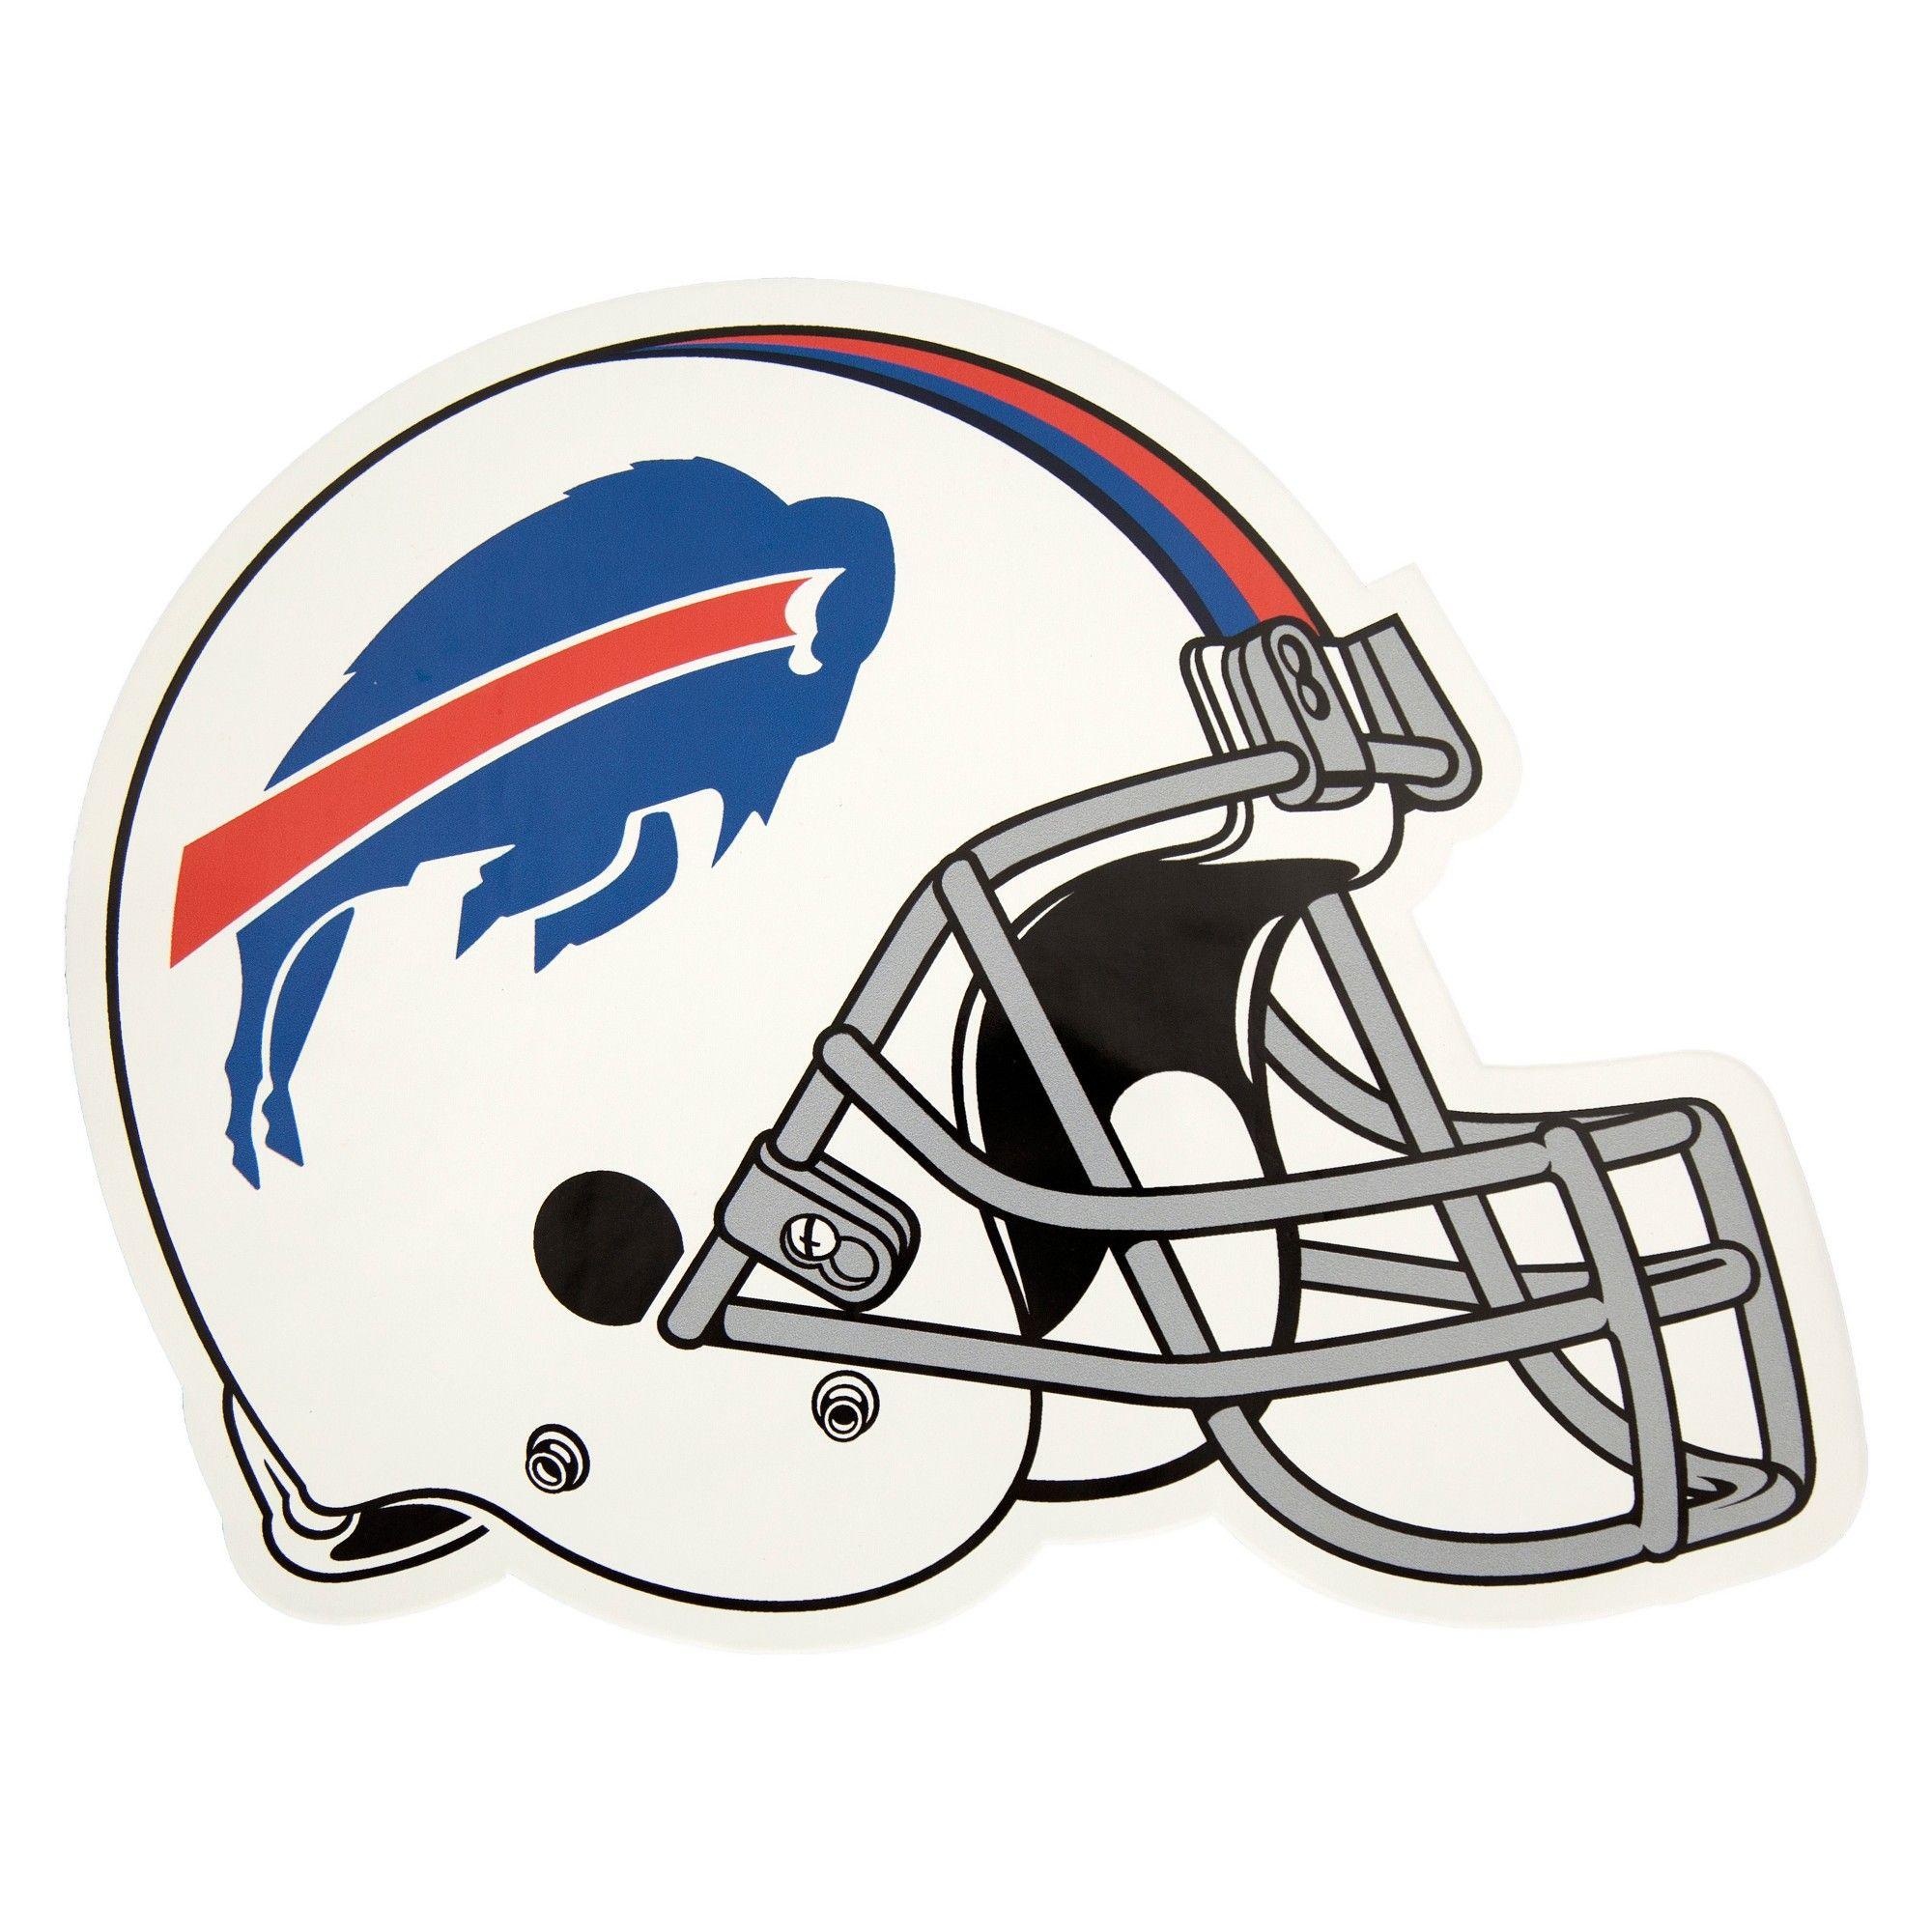 Bills Small Logo - NFL Buffalo Bills Small Outdoor Helmet Decal in 2018 | Products ...